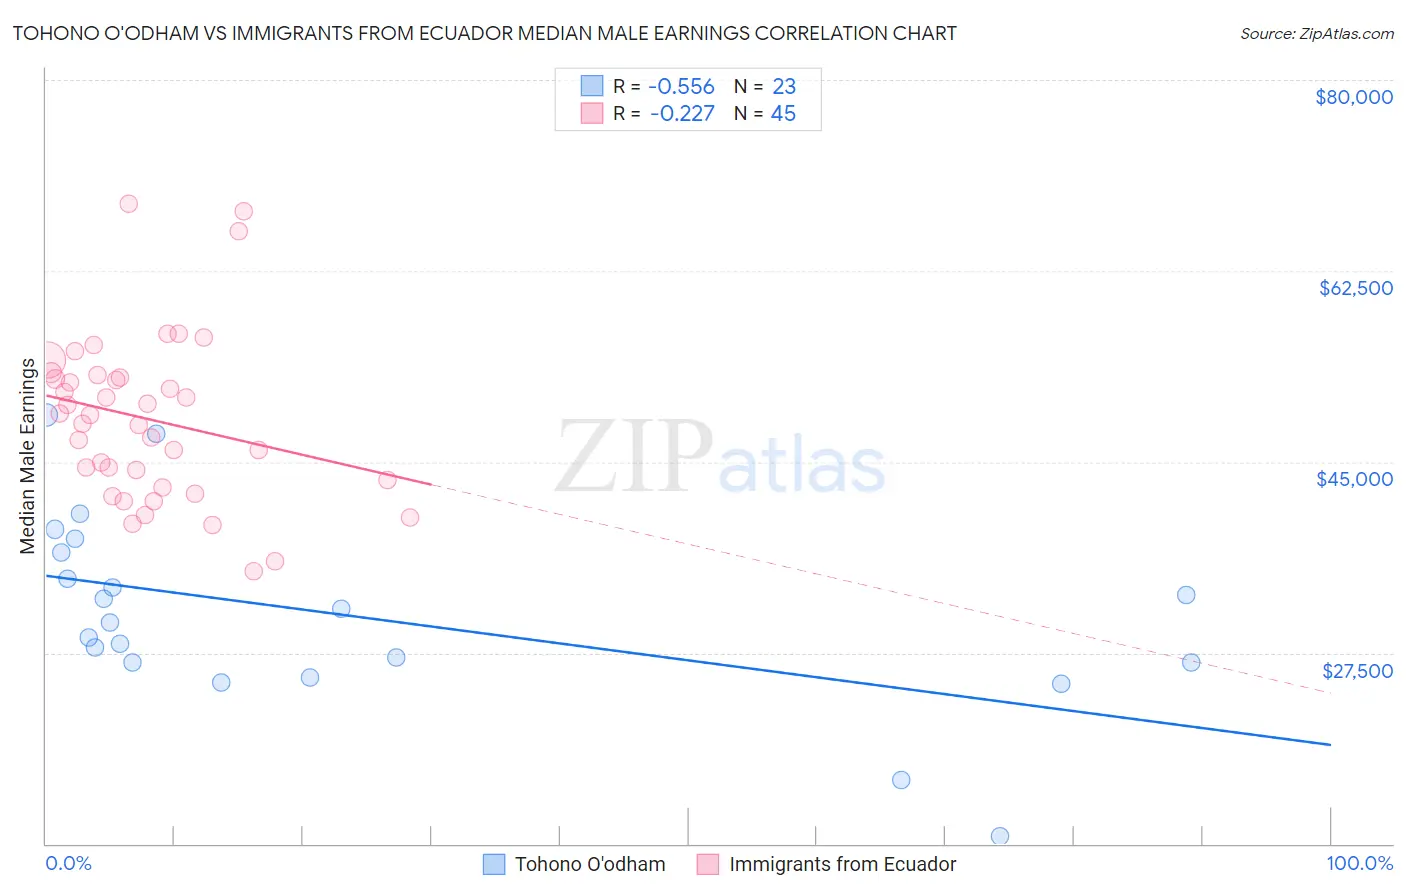 Tohono O'odham vs Immigrants from Ecuador Median Male Earnings